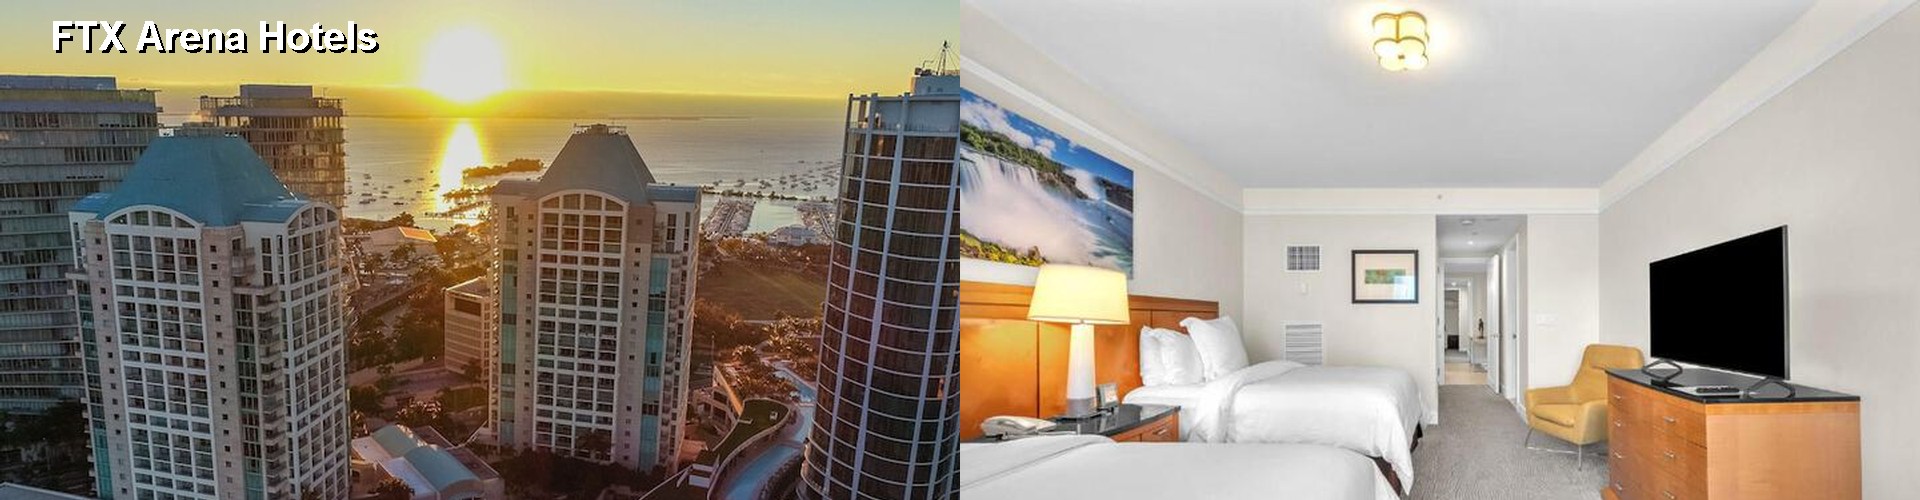 $60+ FINEST Hotels Near American Airlines Arena - Miami Heat (FL)